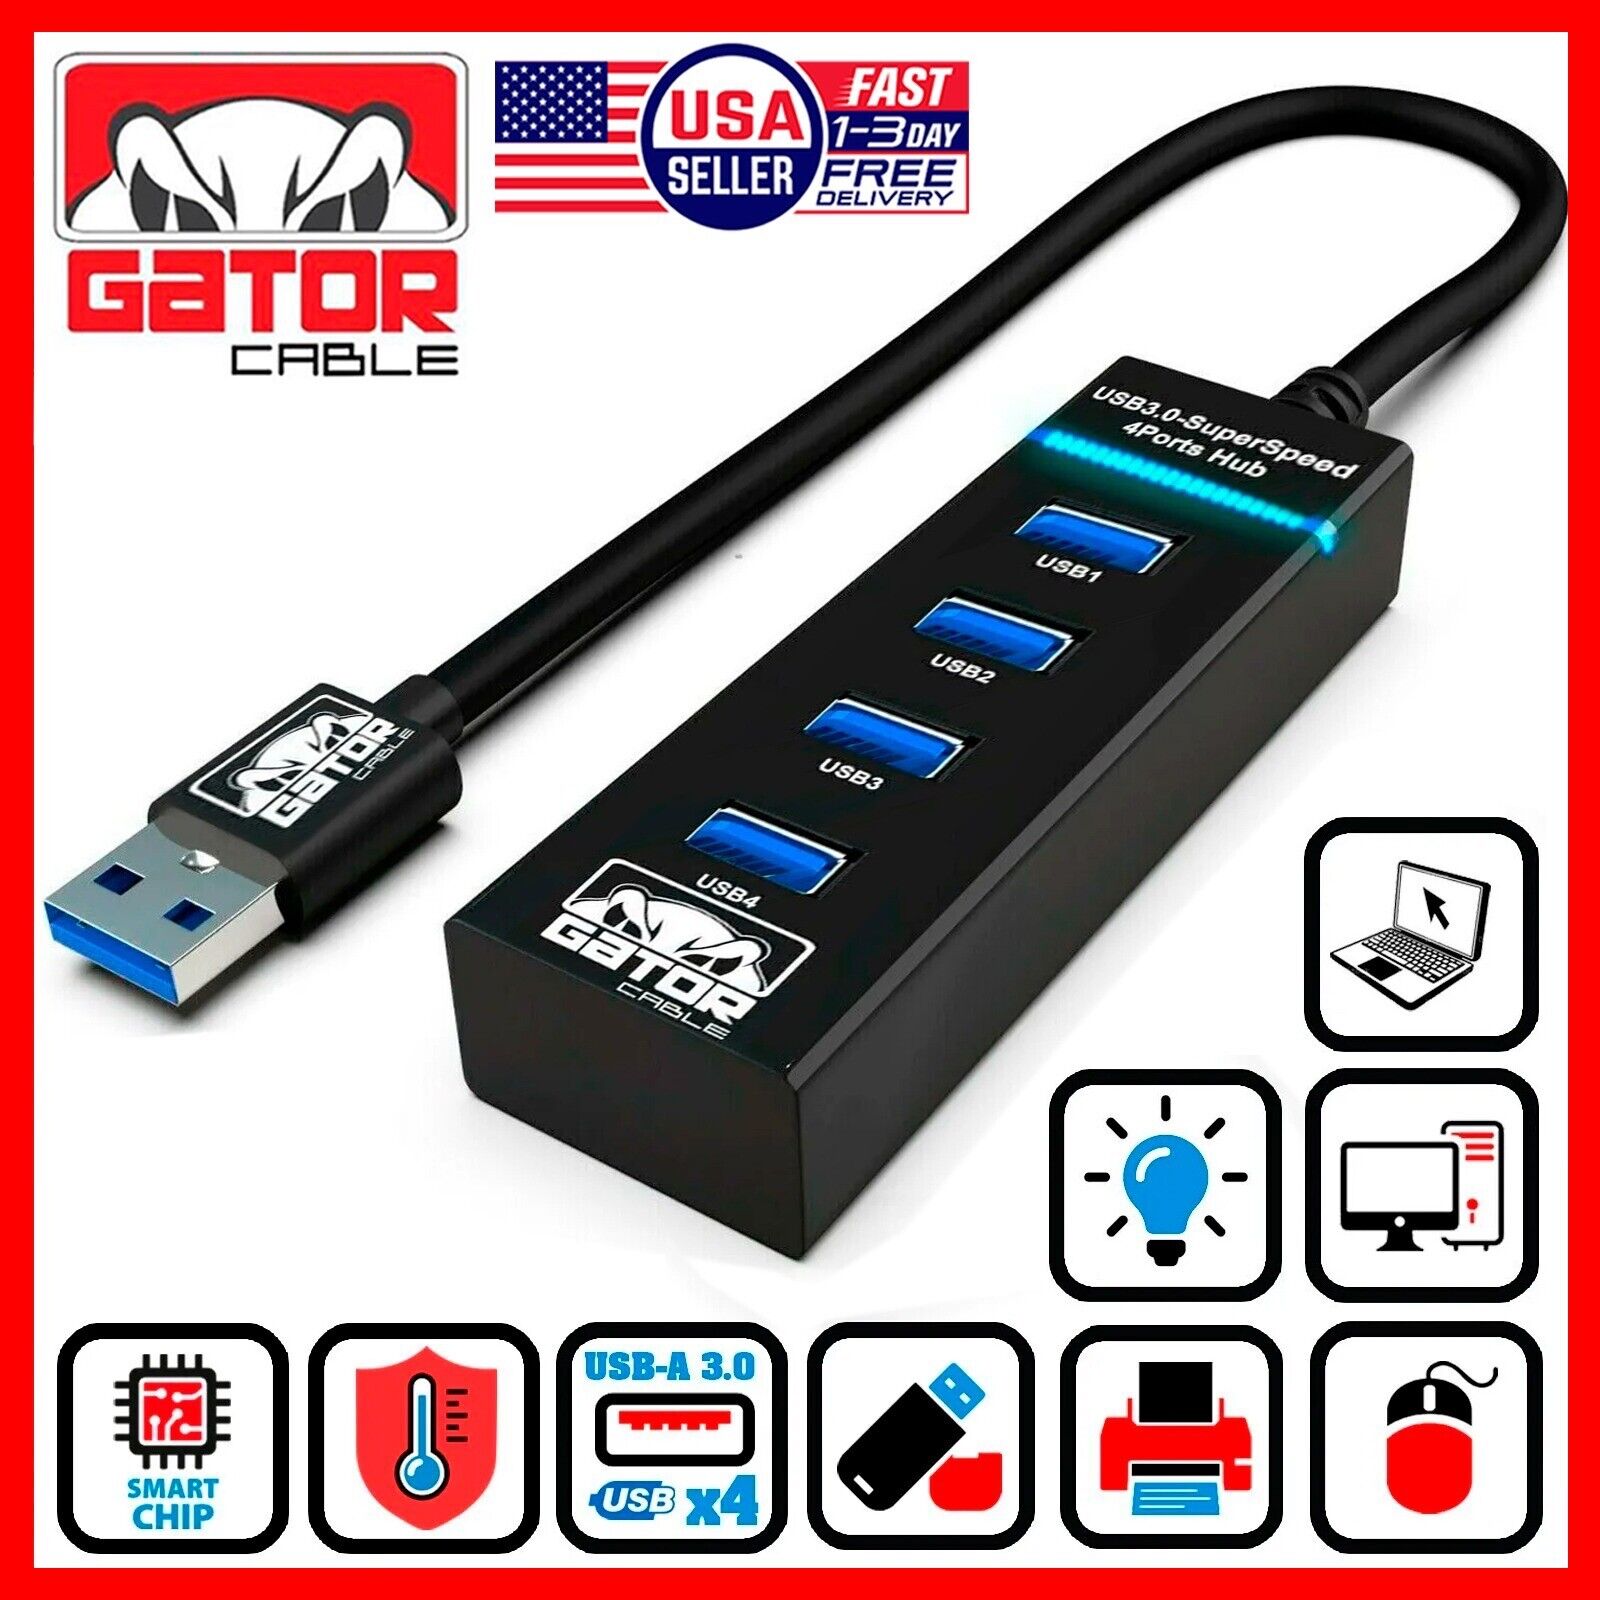 USB 3.0 HUB 4-USB Port Multi Adapter Charger Data For PC Mac Laptop Desktop LED